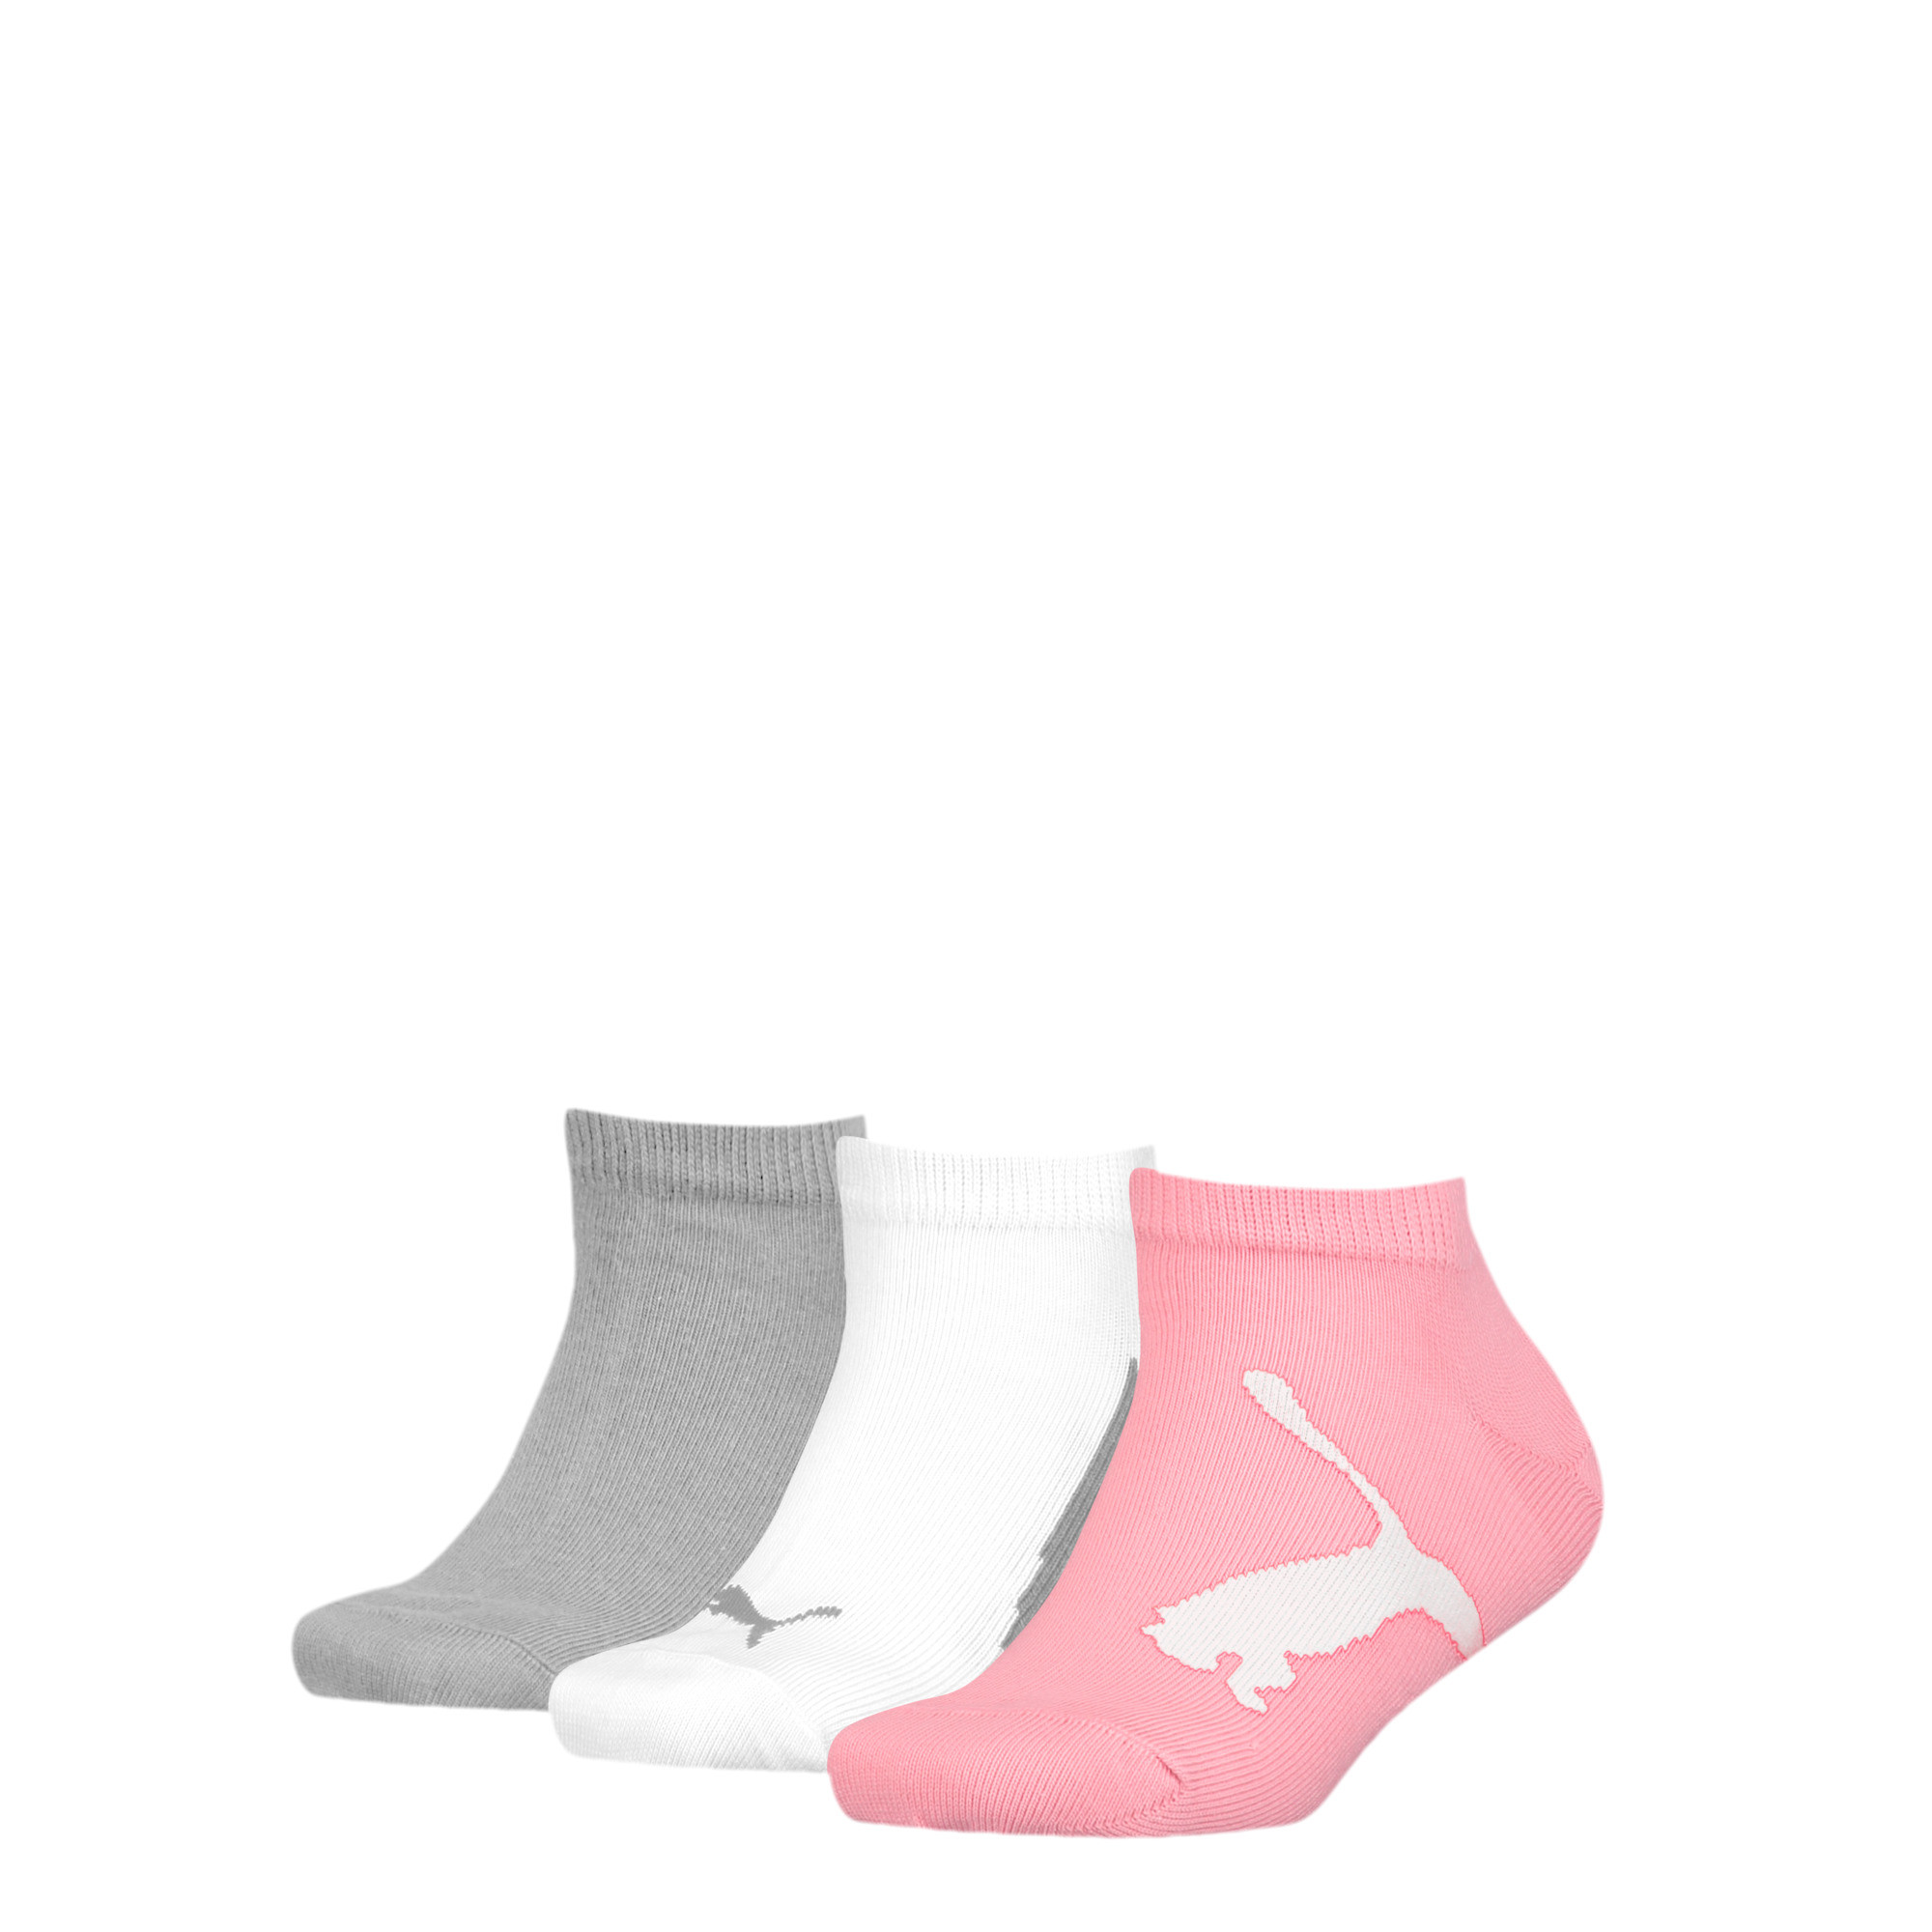 Kids' PUMA BWT Sneaker - Trainer Socks 3 Pack In Pink/Grey, Size 27-30